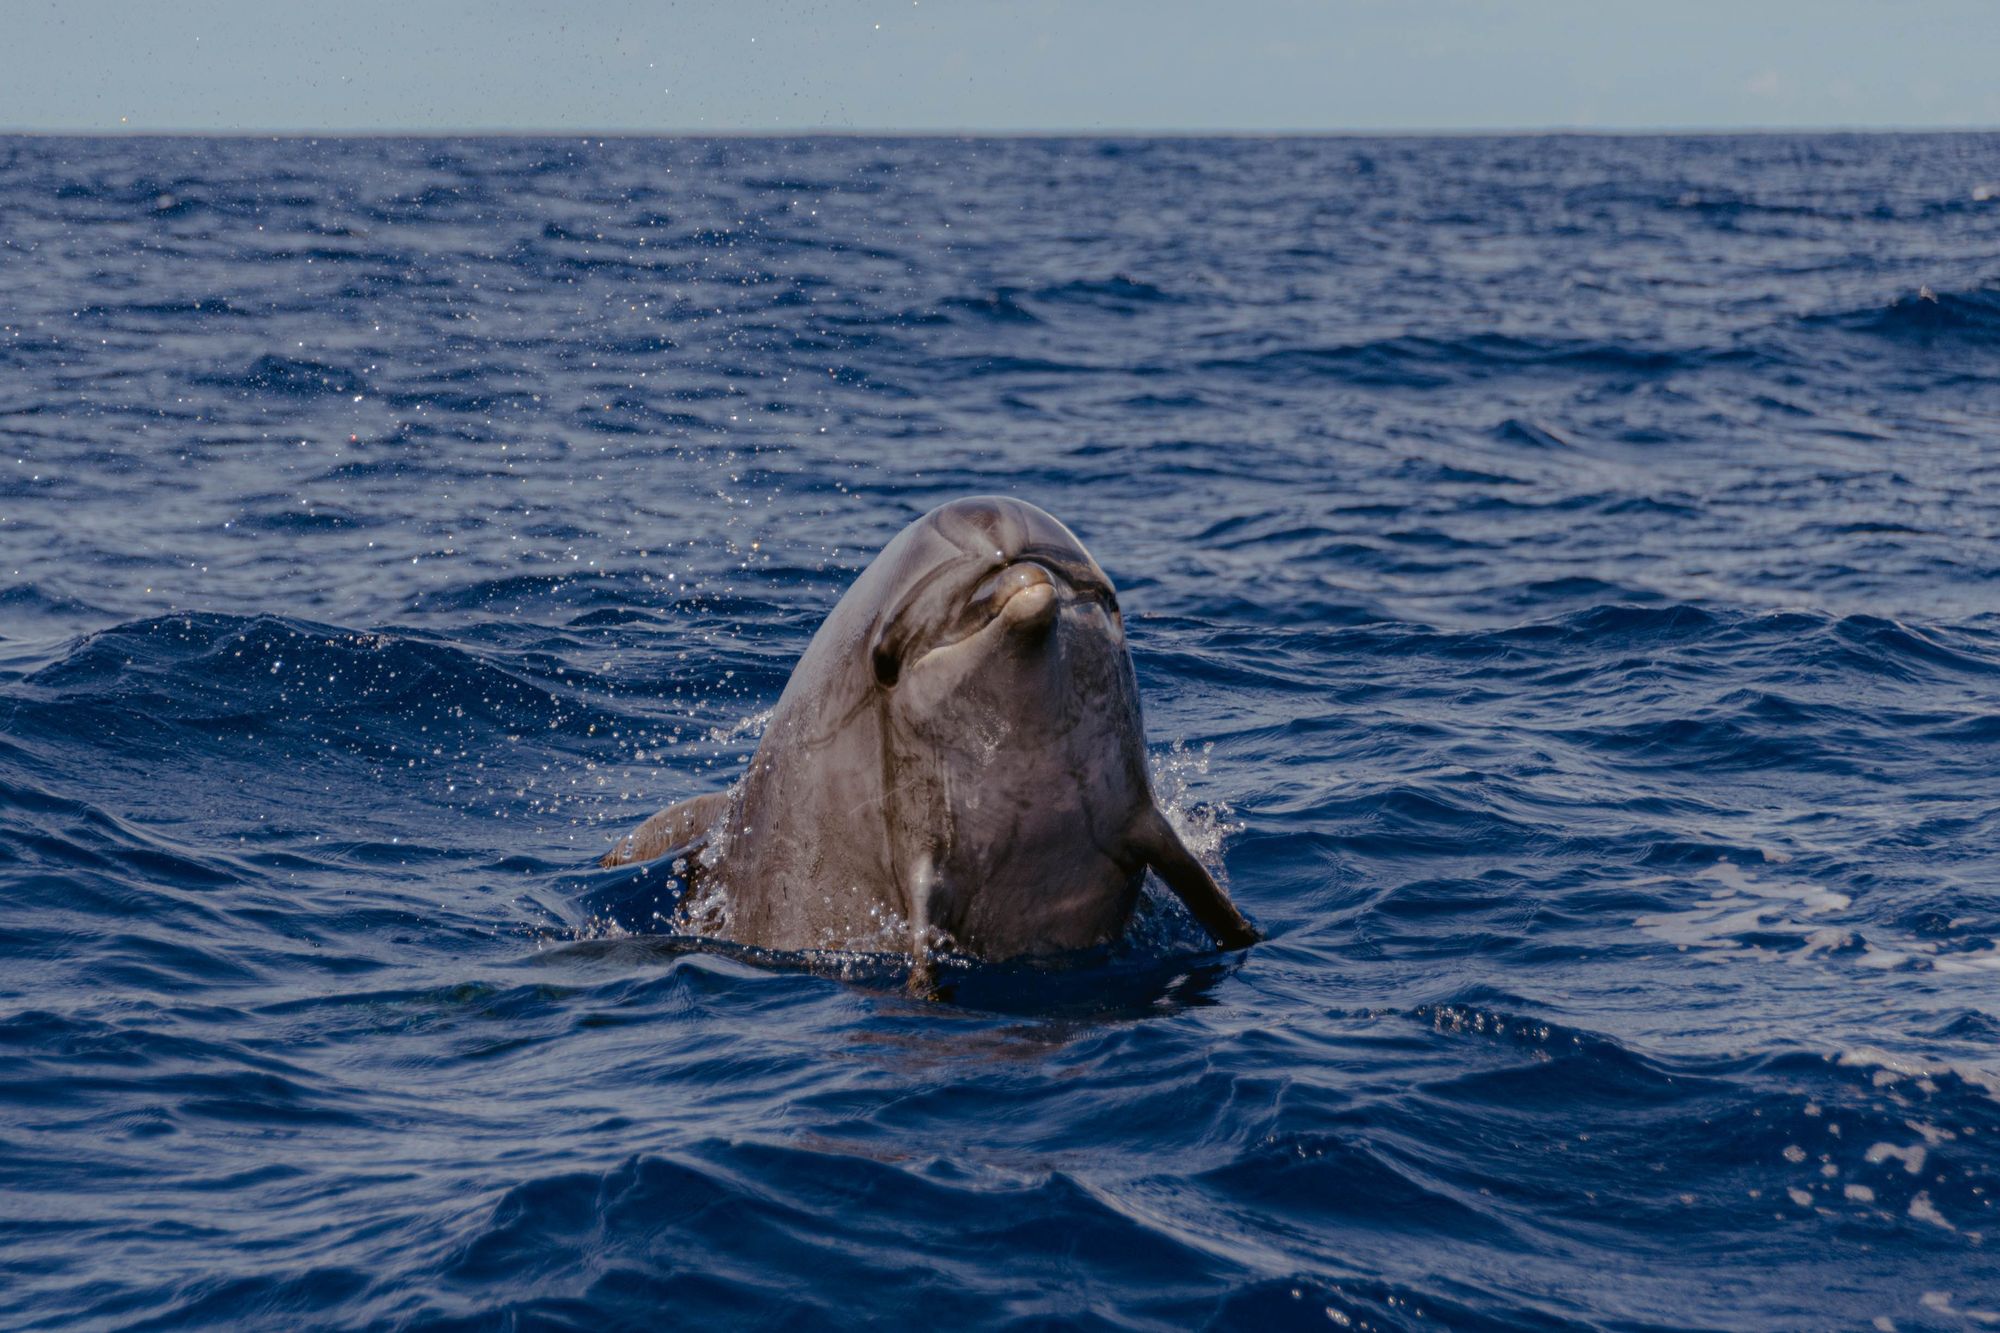 A friendly dolphin emerges from the ocean near São Miguel Island. Photo: Getty.